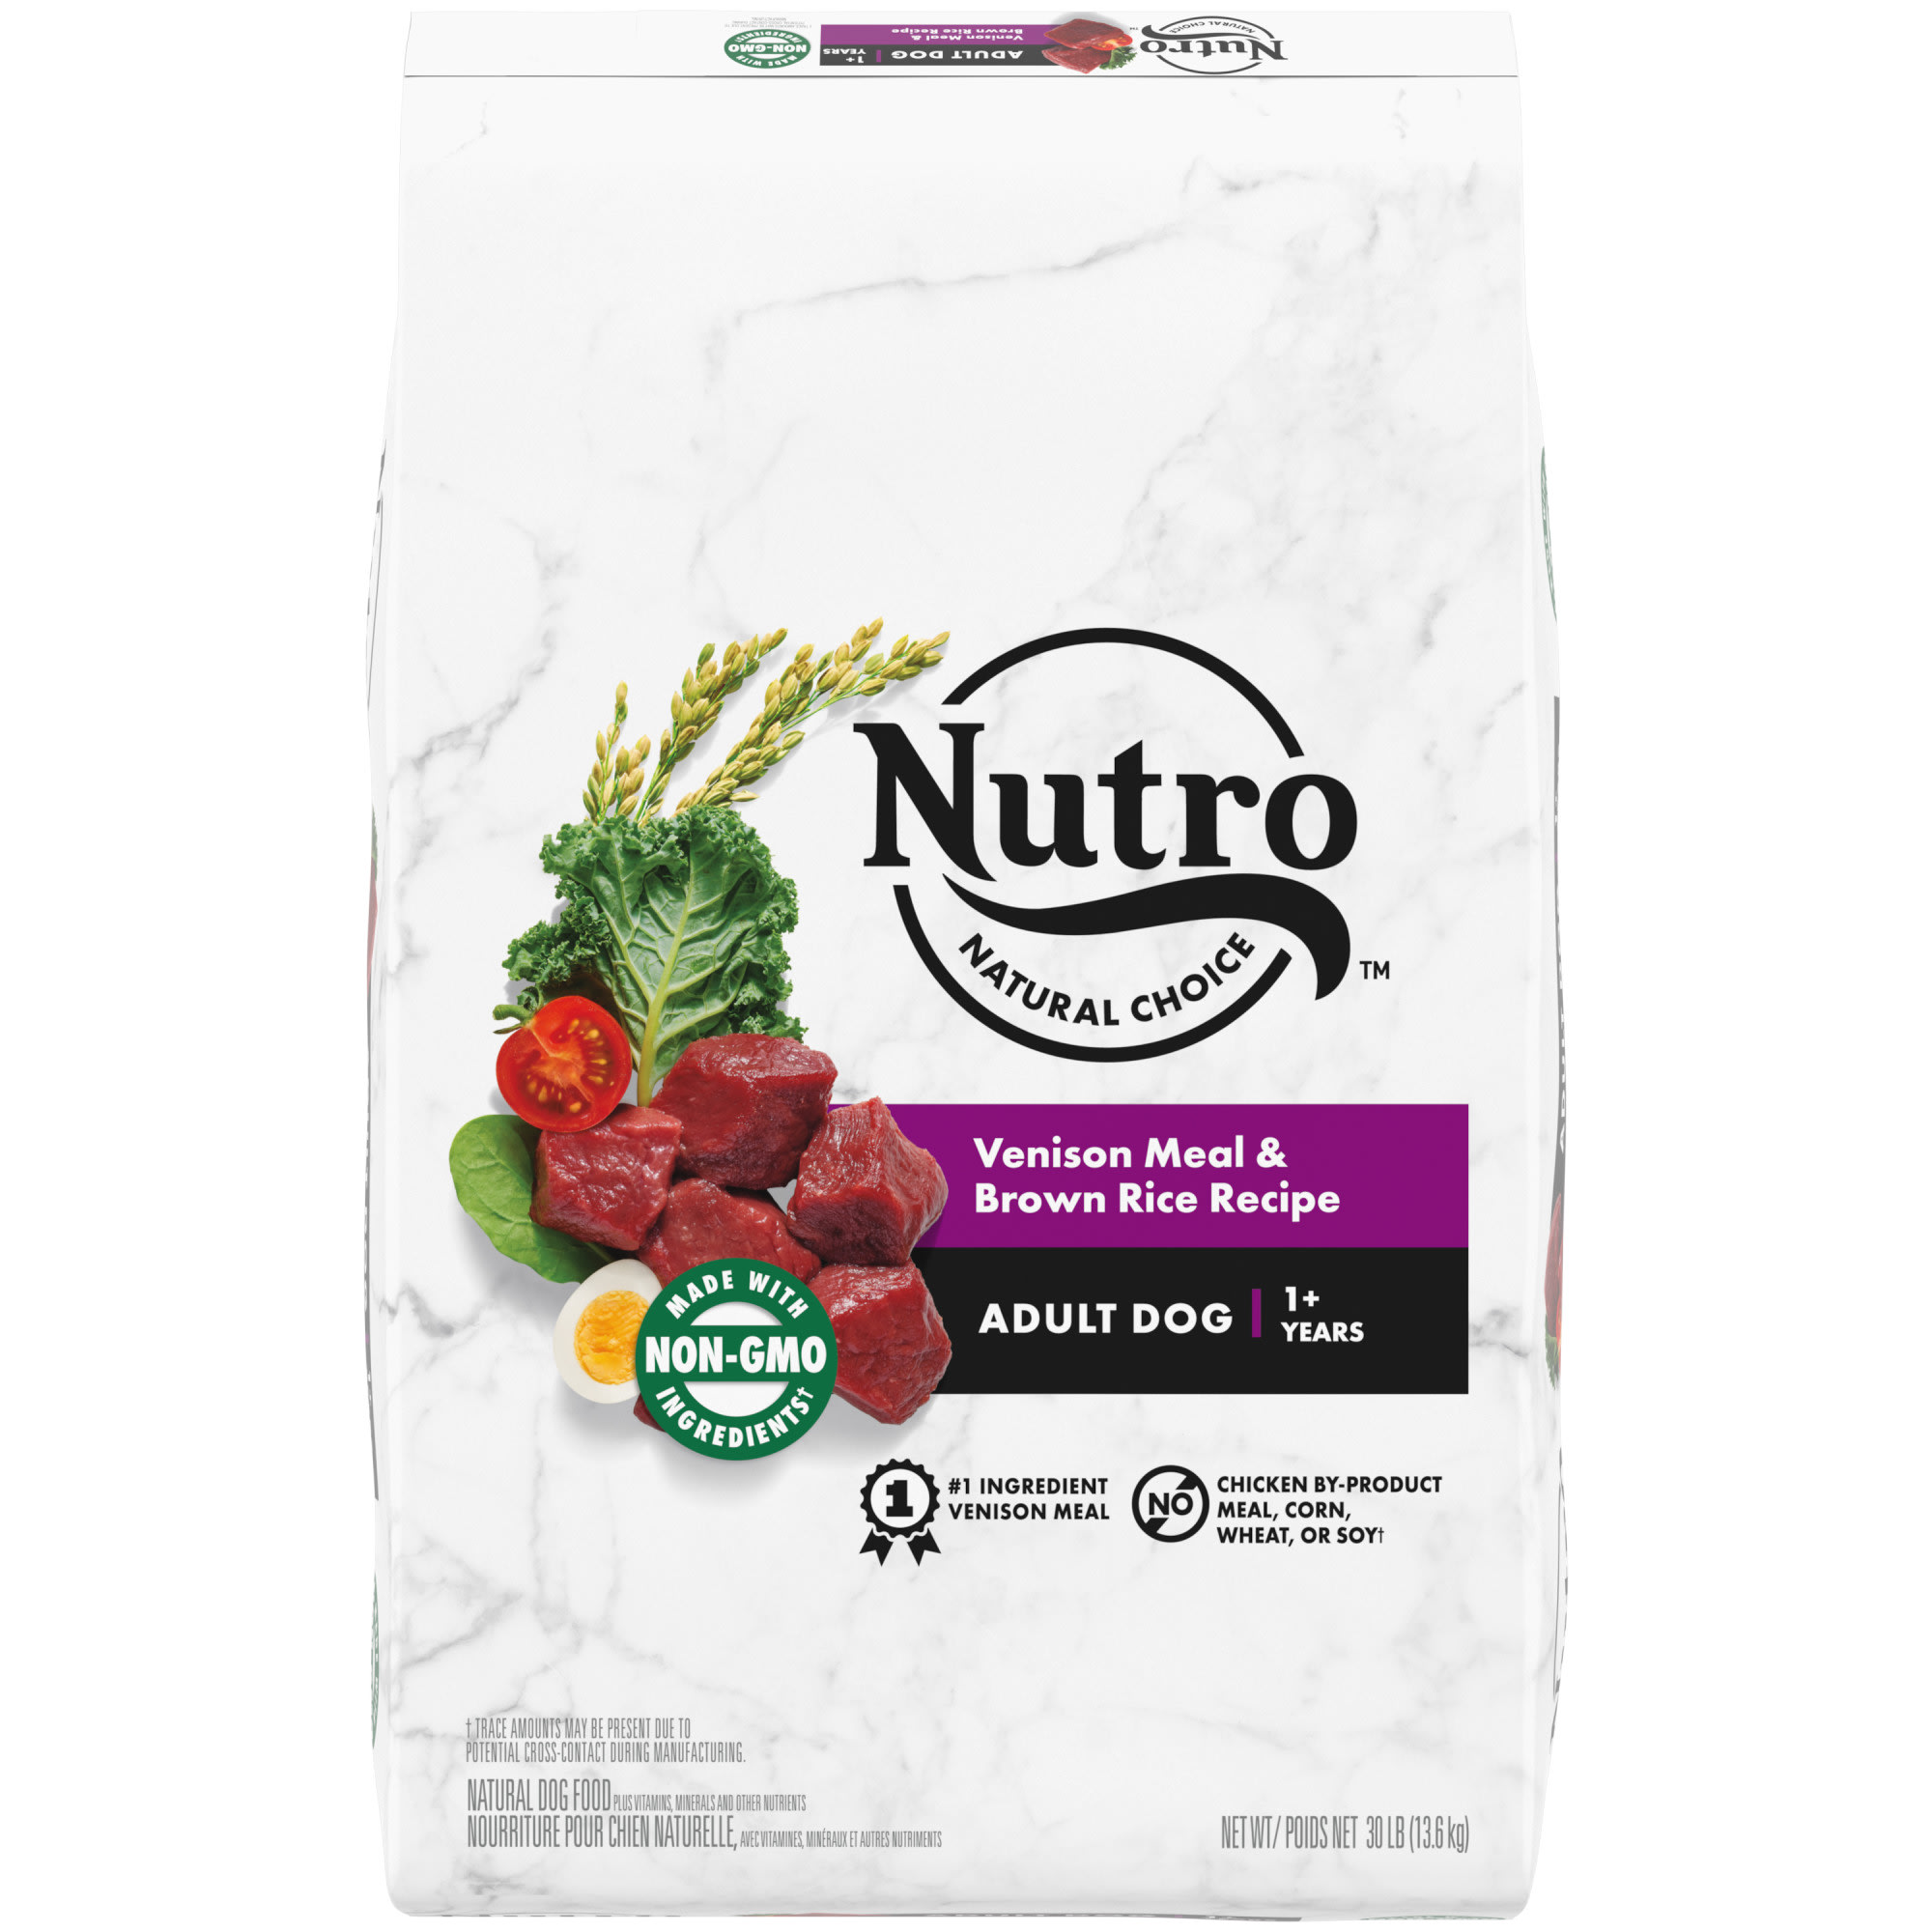 Nutro Natural Choice Cat Food Reviews